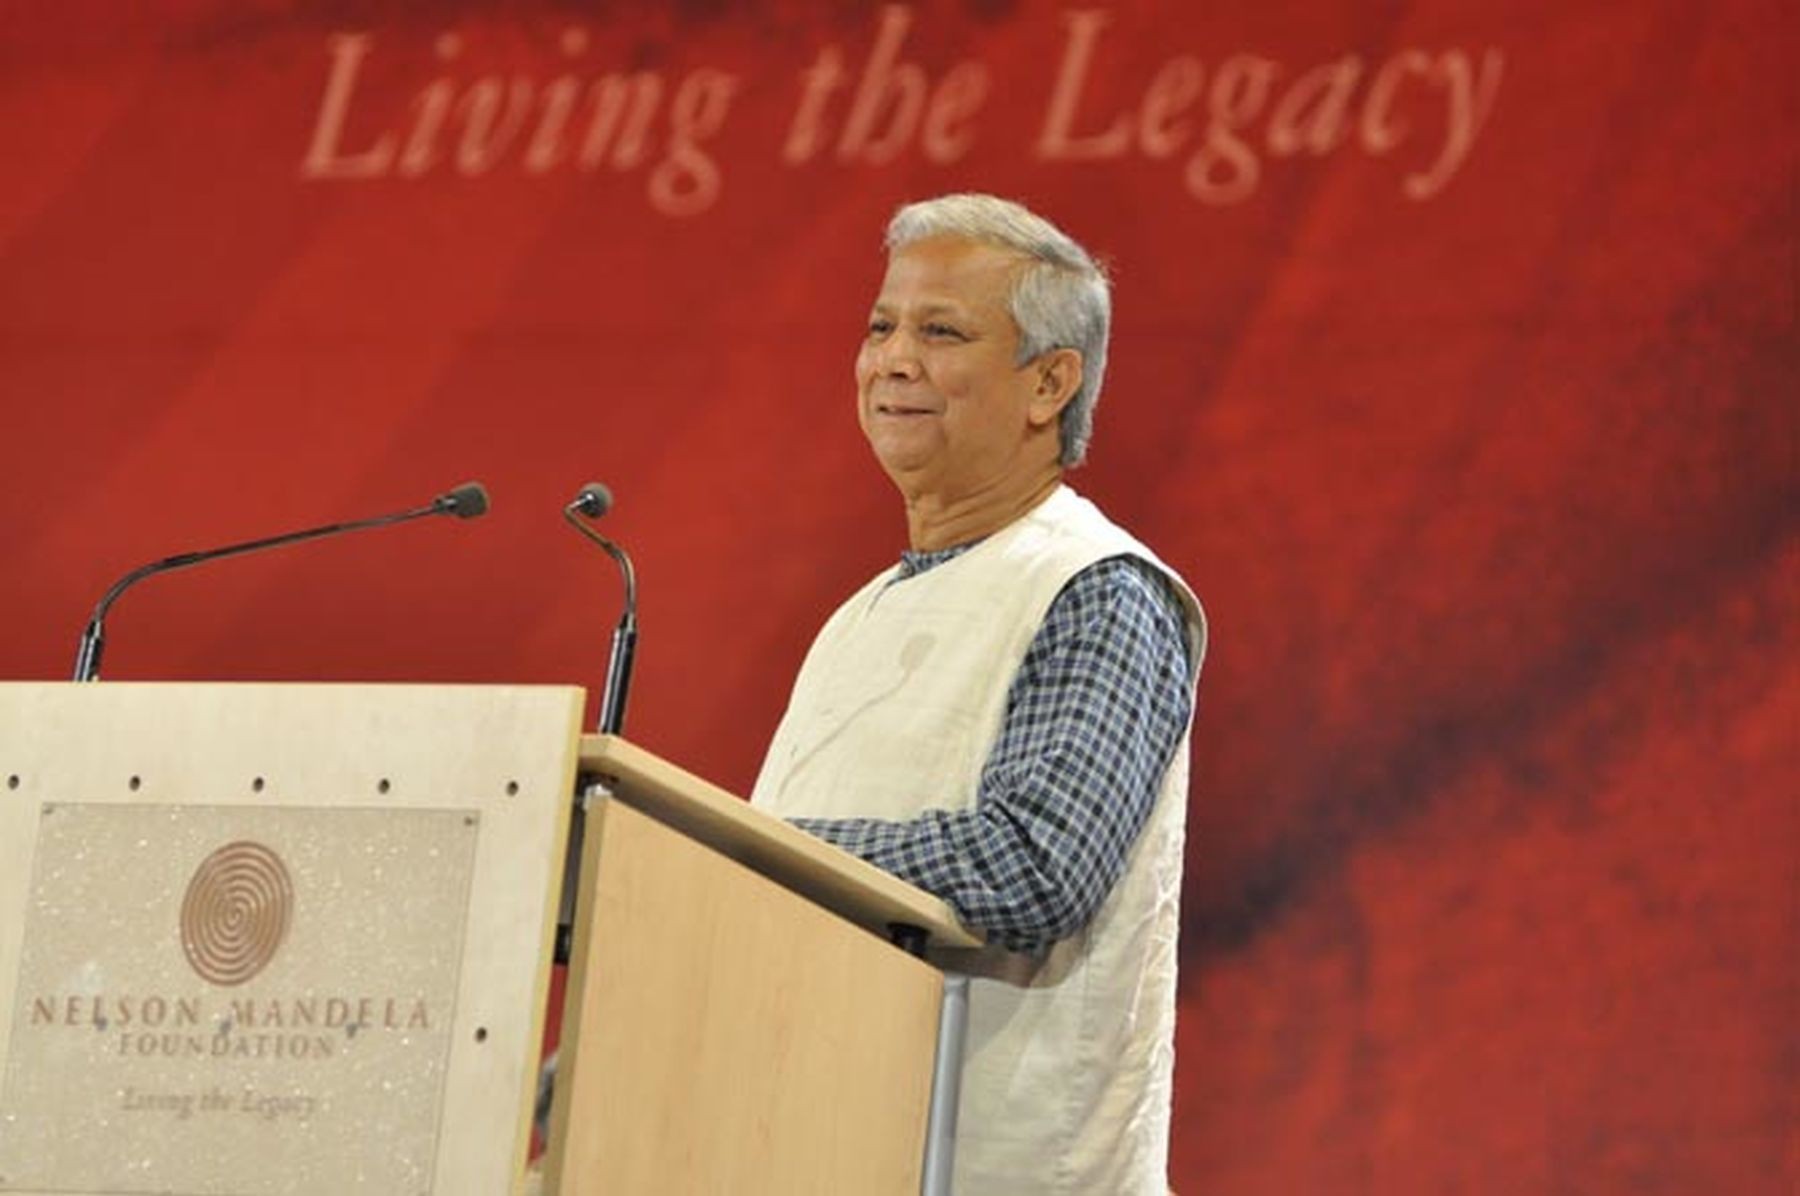  O economista e vencedor do Prêmio Nobel da Paz, Muhammad Yunus (Foto: Muhammad Yunus/Nelson Mandela Foundation )